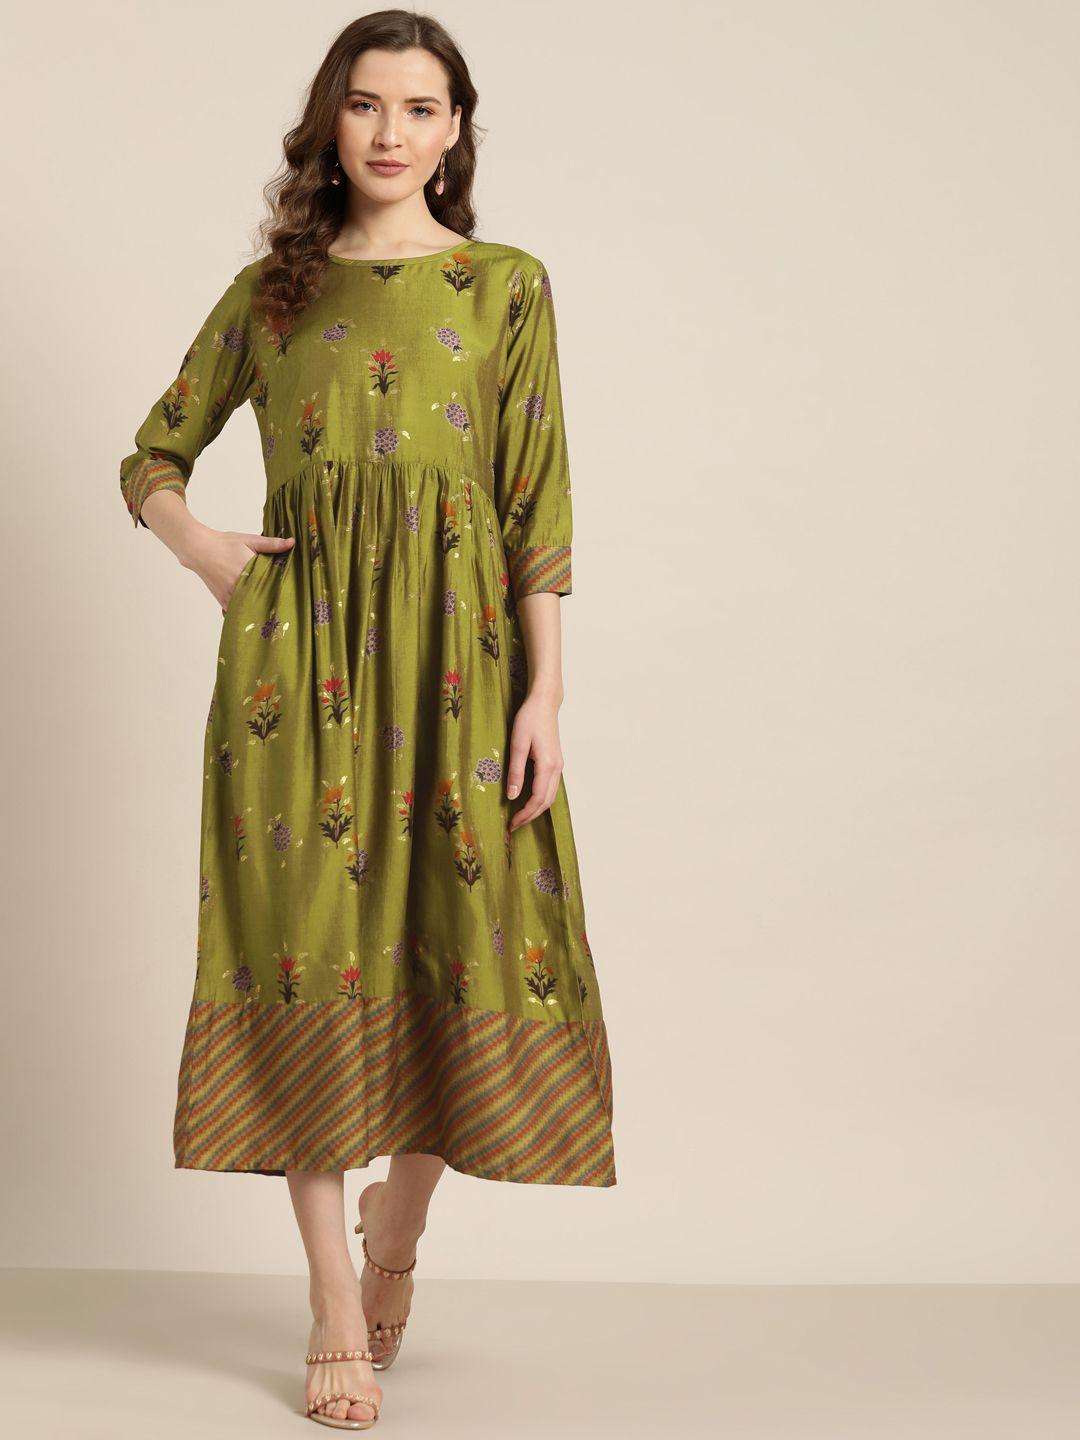 sangria women green & orange ethnic floral motif print a-line dress